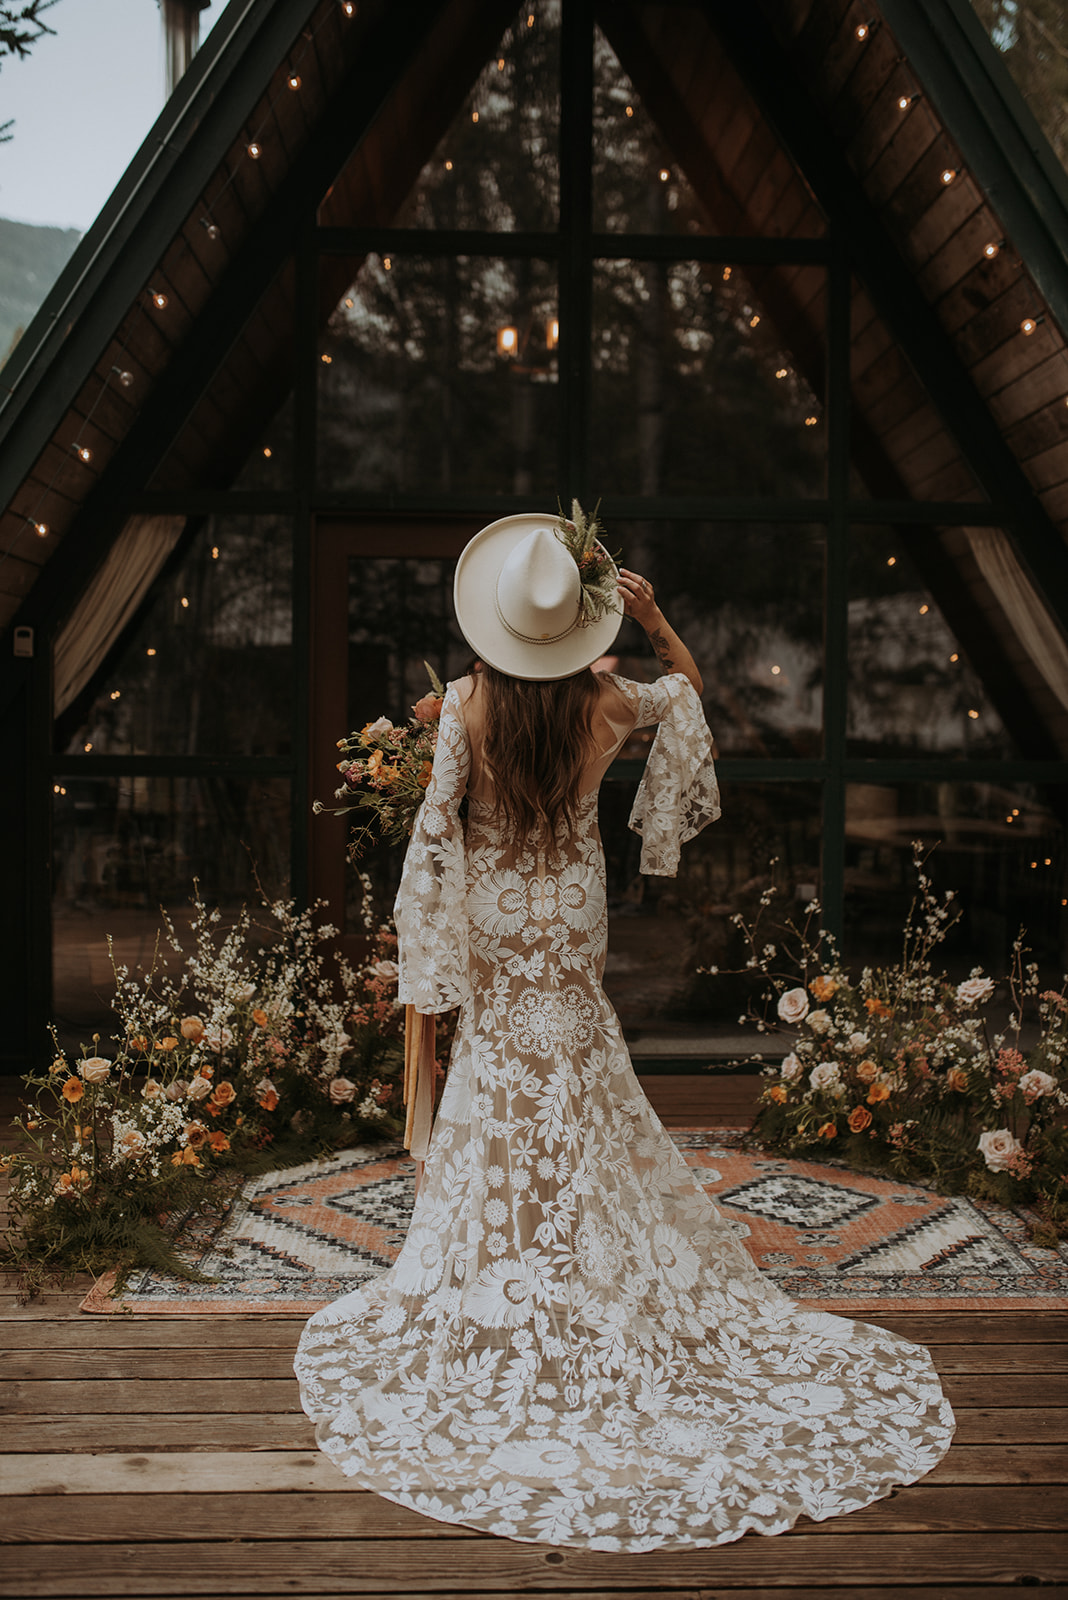 Mount Rainier elopement photographer captures intimate moment at cozy a-frame cabin, Woodsy wedding details, boho bride